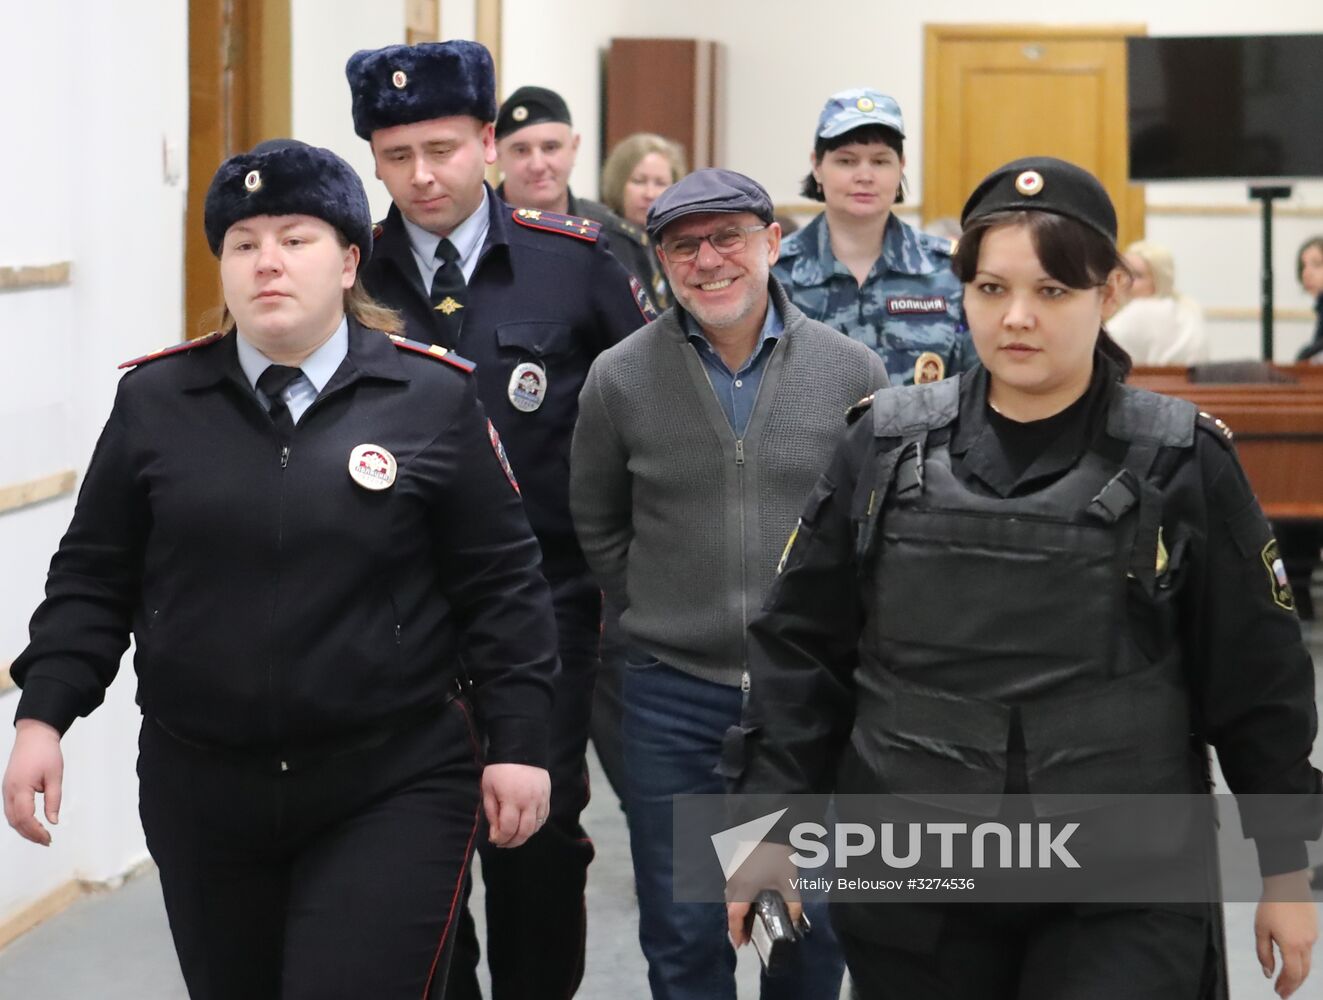 Court hears investigators' motion on extending home arrest of film director Kirill Serebrennikov